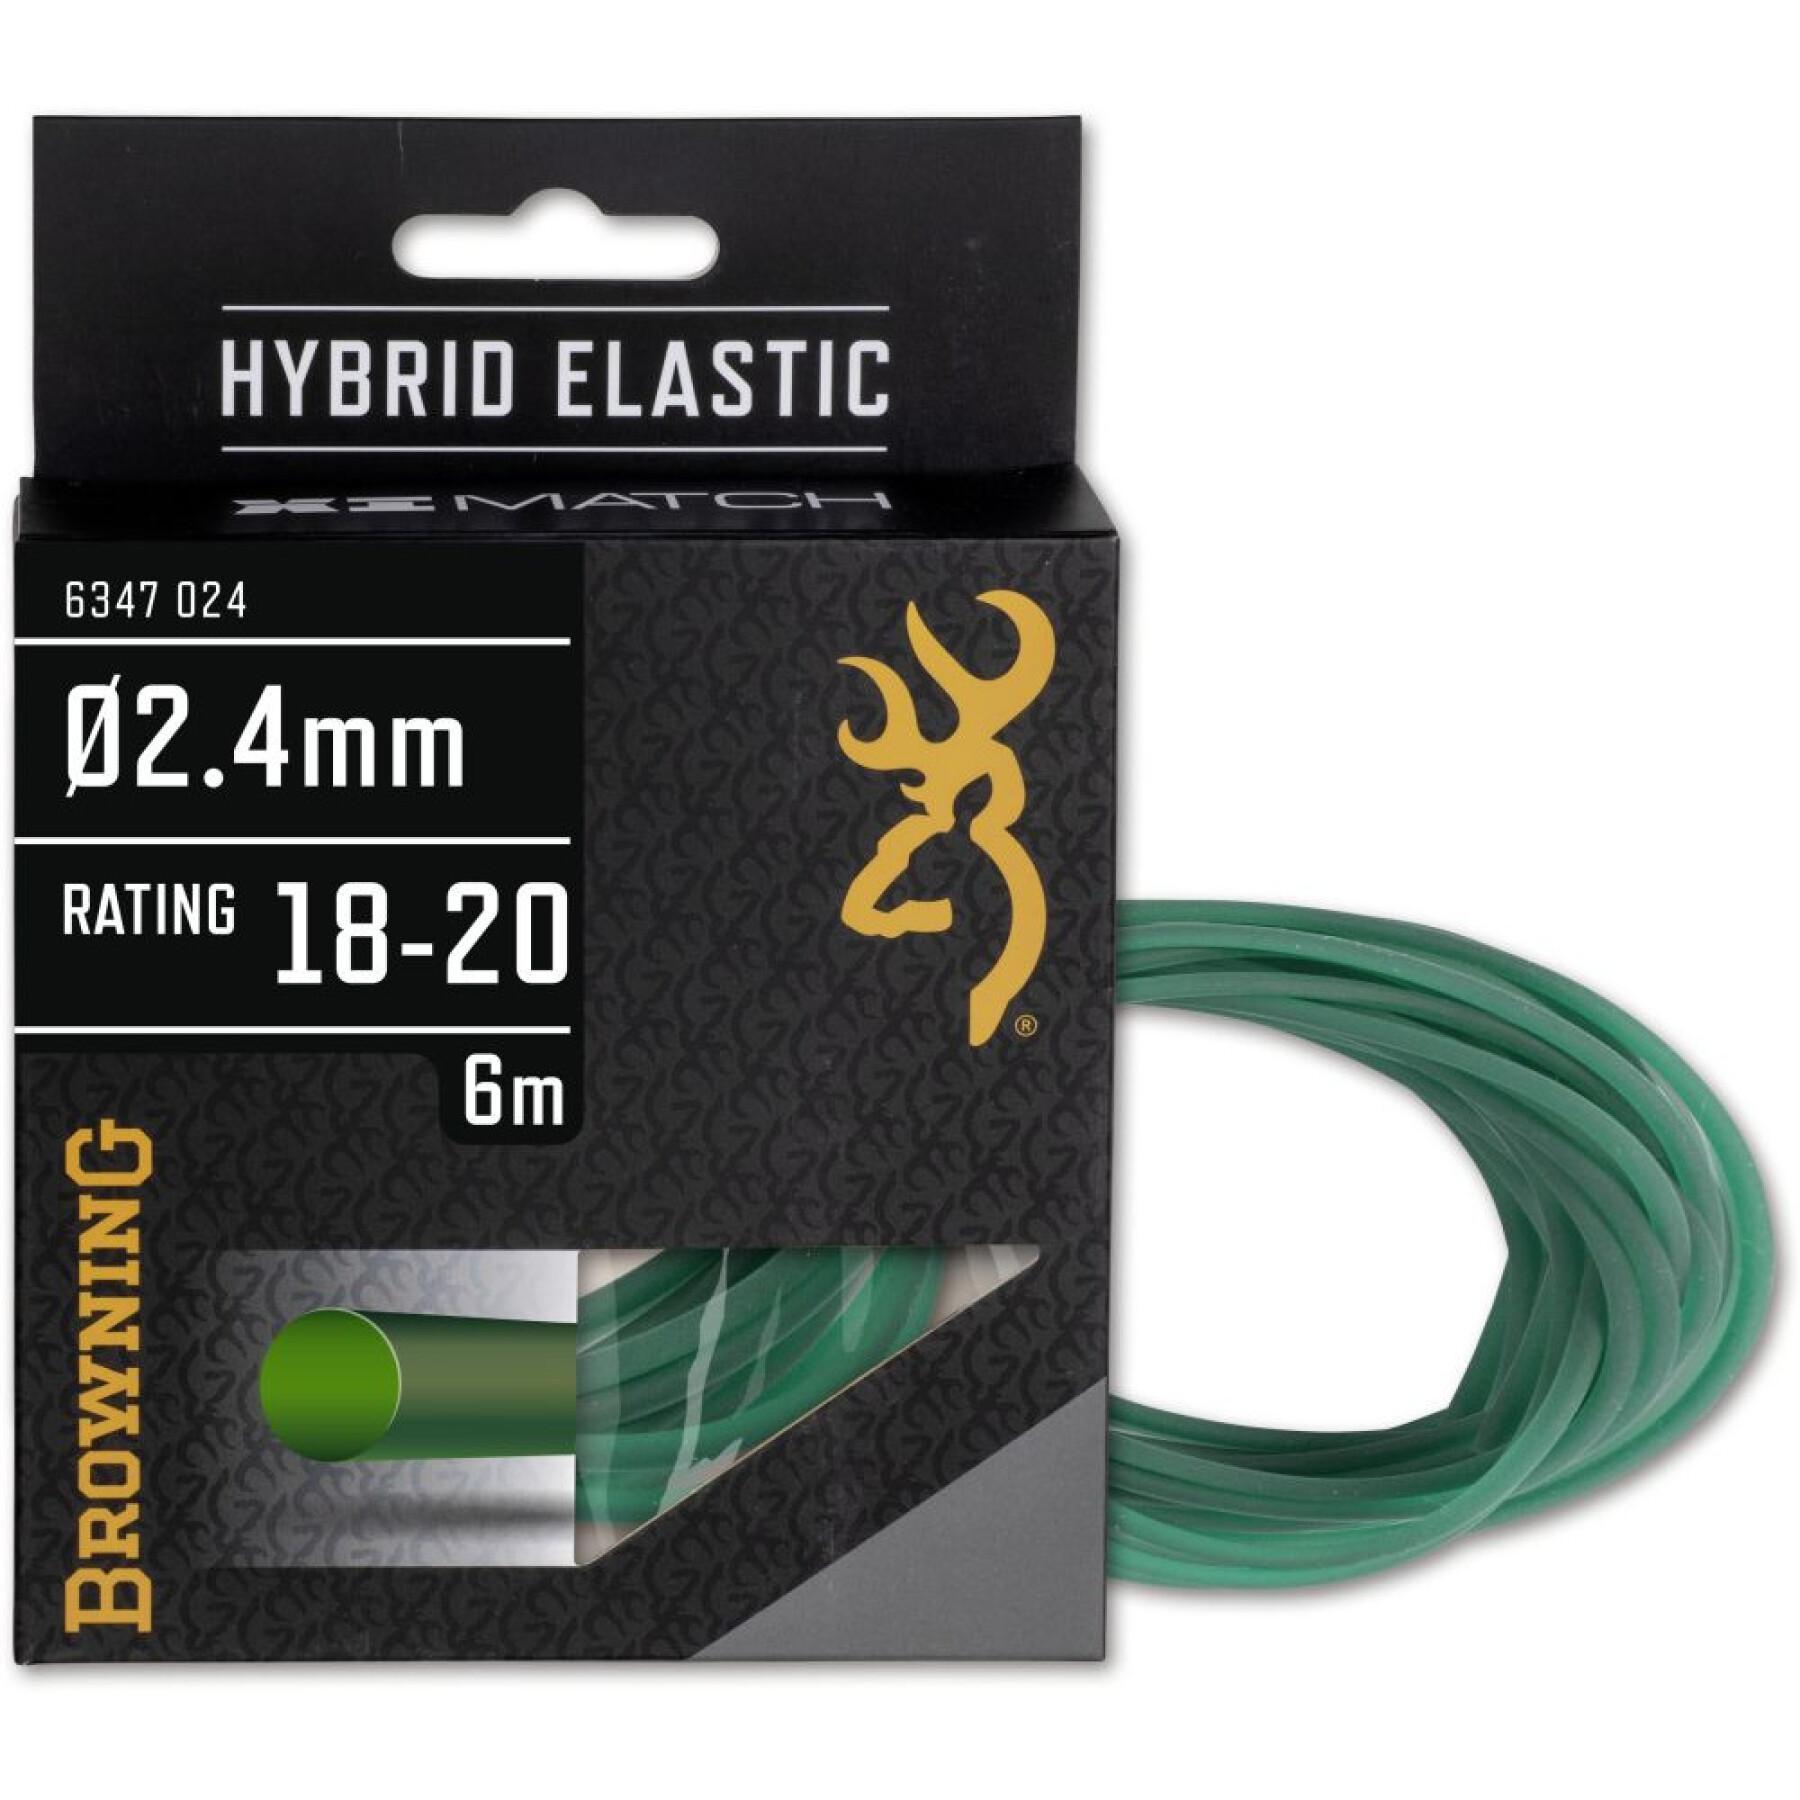 elastic mixed blow hybrid Browning